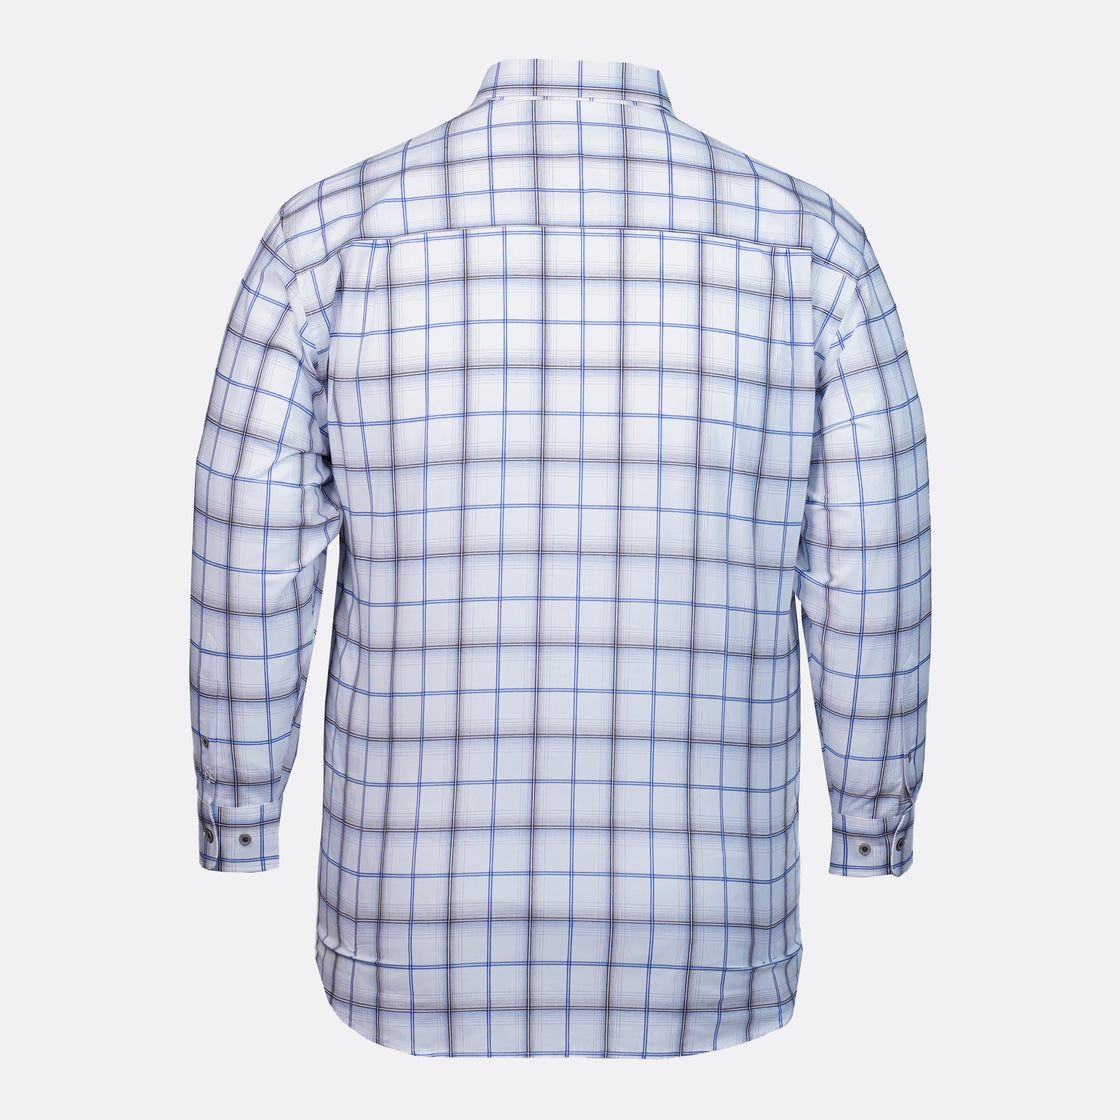 Cutter & Buck Windowpane Checkered Shirt